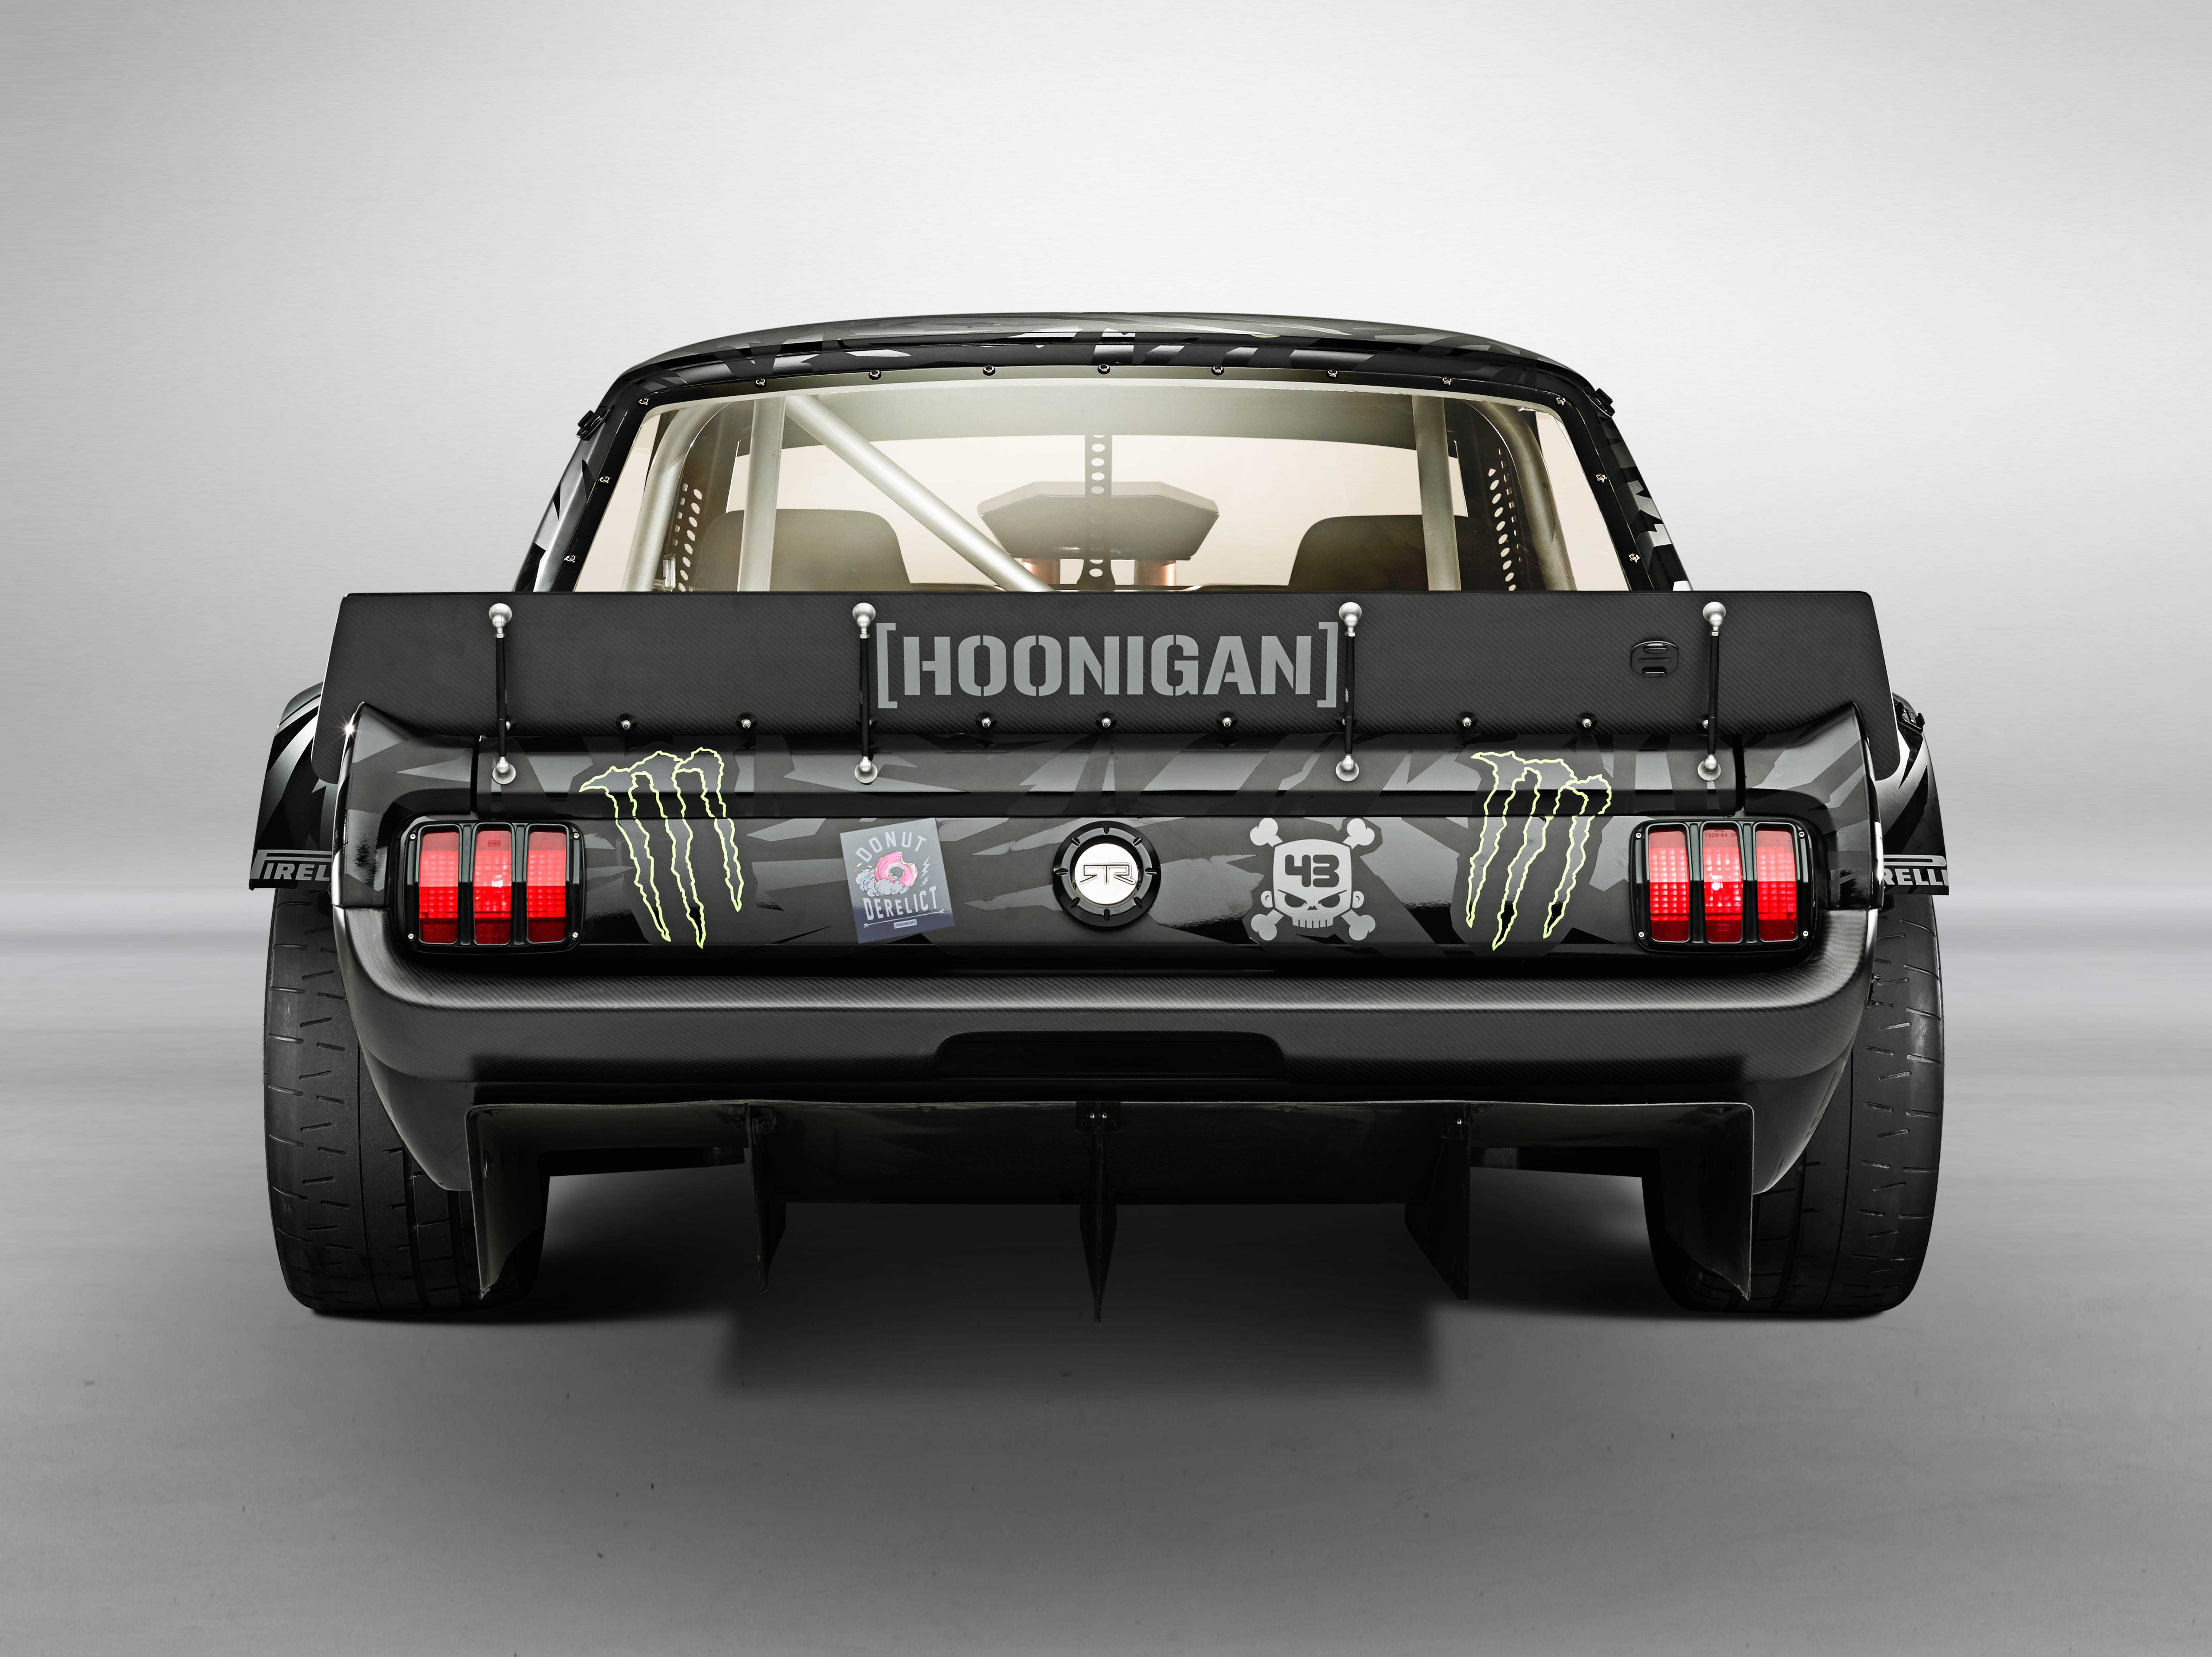 [HOONIGAN] Chris Harris on Ken Block's Gymkhana SEVEN AWD 1965 Mustang (The Hoonicorn!)